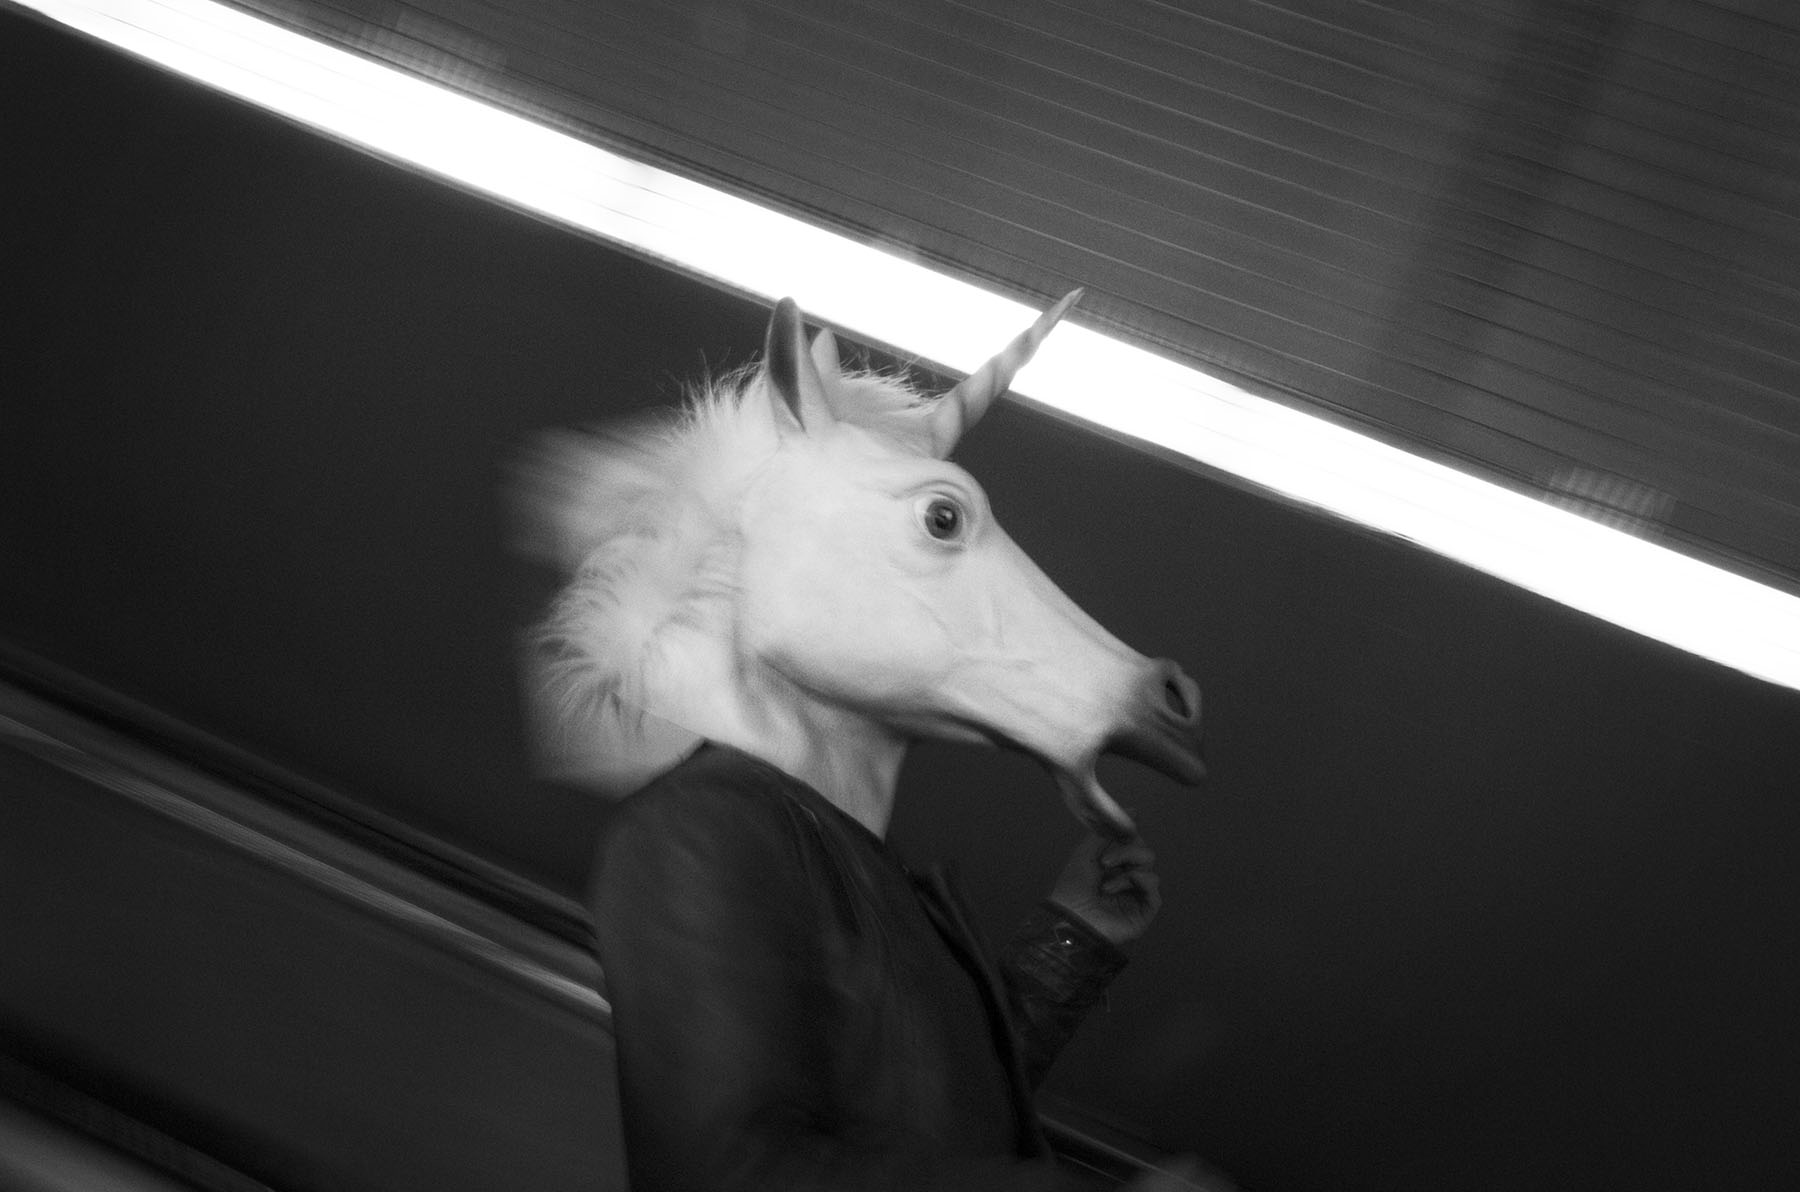 Beast - close up of person wearing unicorn mask on tube escalator